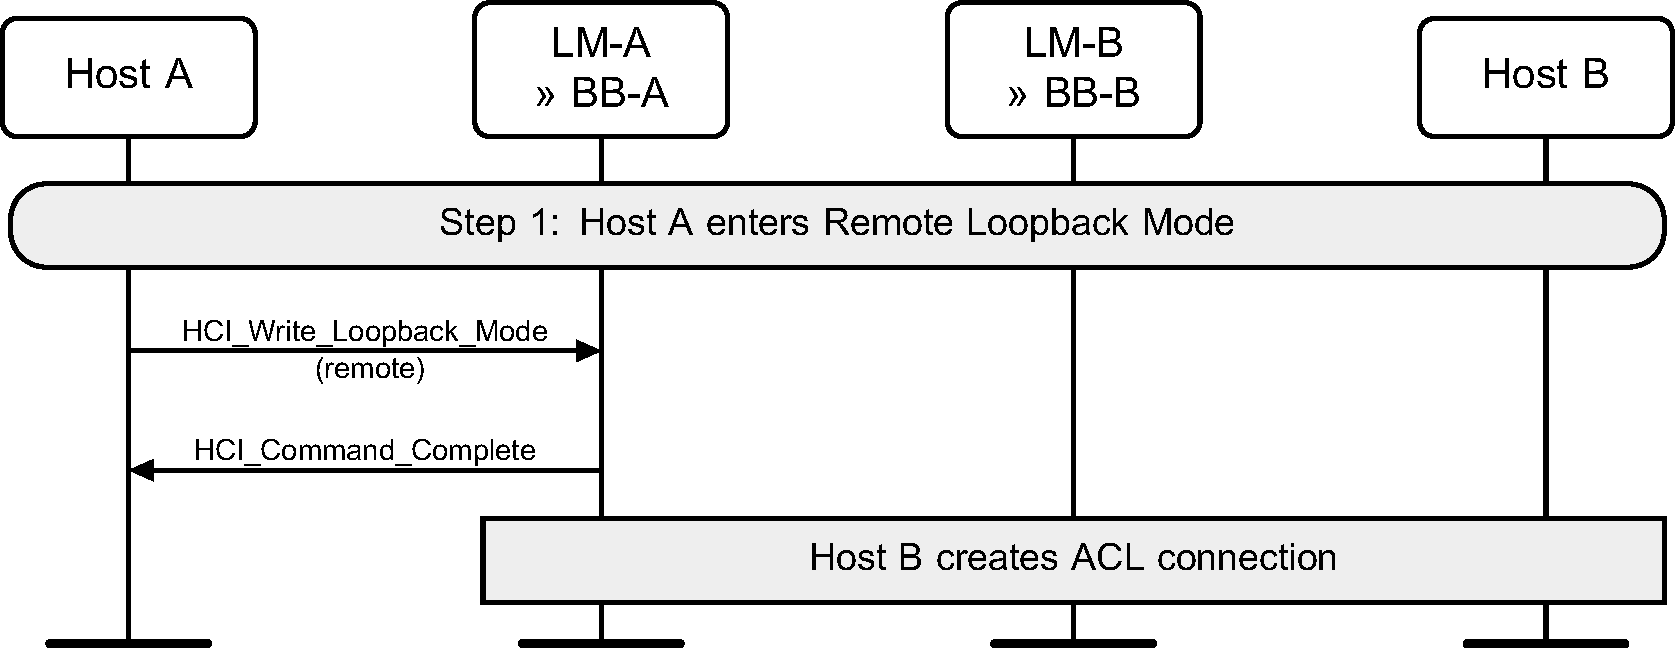 Entering Remote Loopback mode